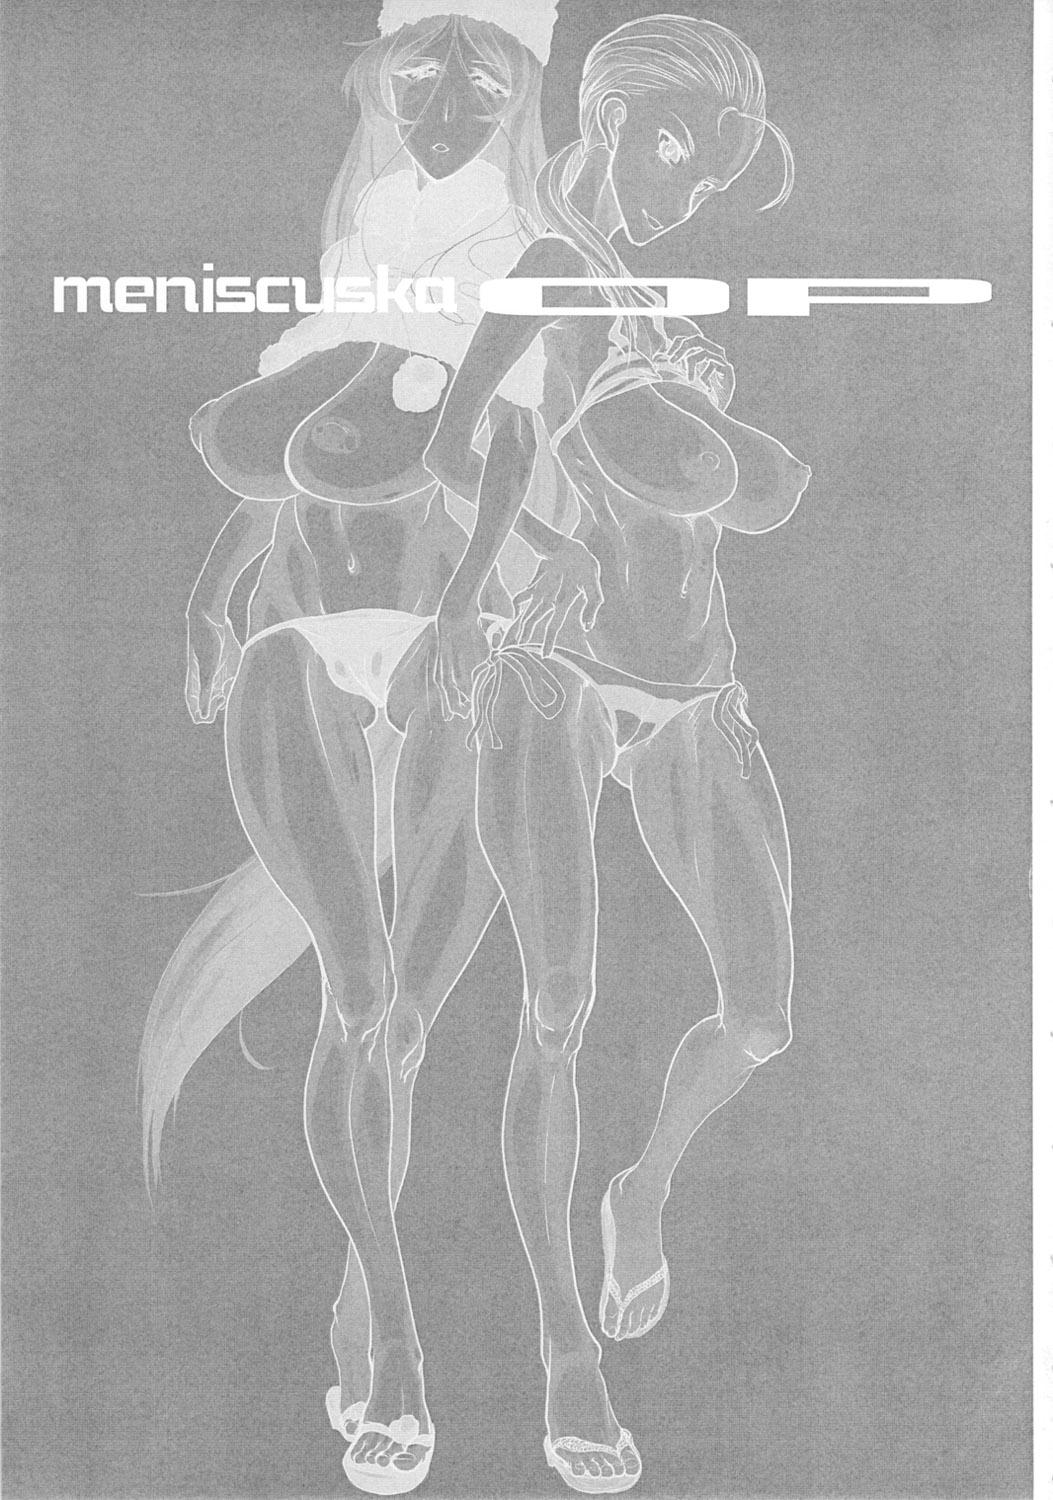 Wet Cunts Meniscuska OP - Neon genesis evangelion Galaxy express 999 Hot Women Having Sex - Page 2